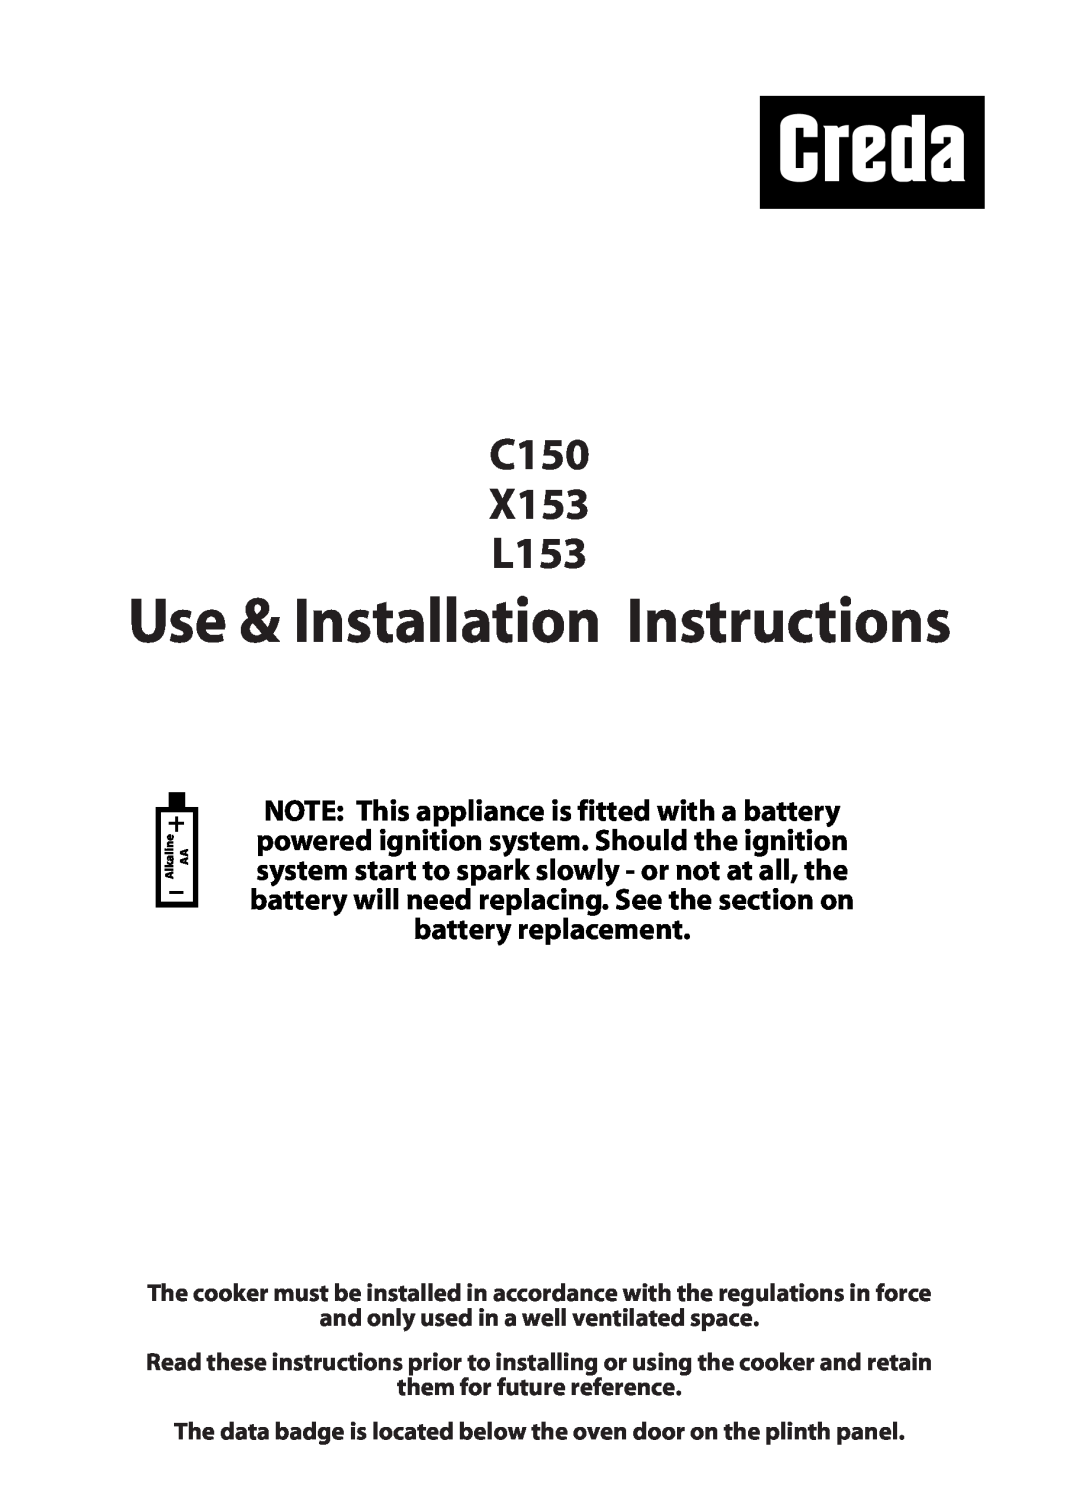 Creda installation instructions Use & Installation Instructions, C150 X153 L153 